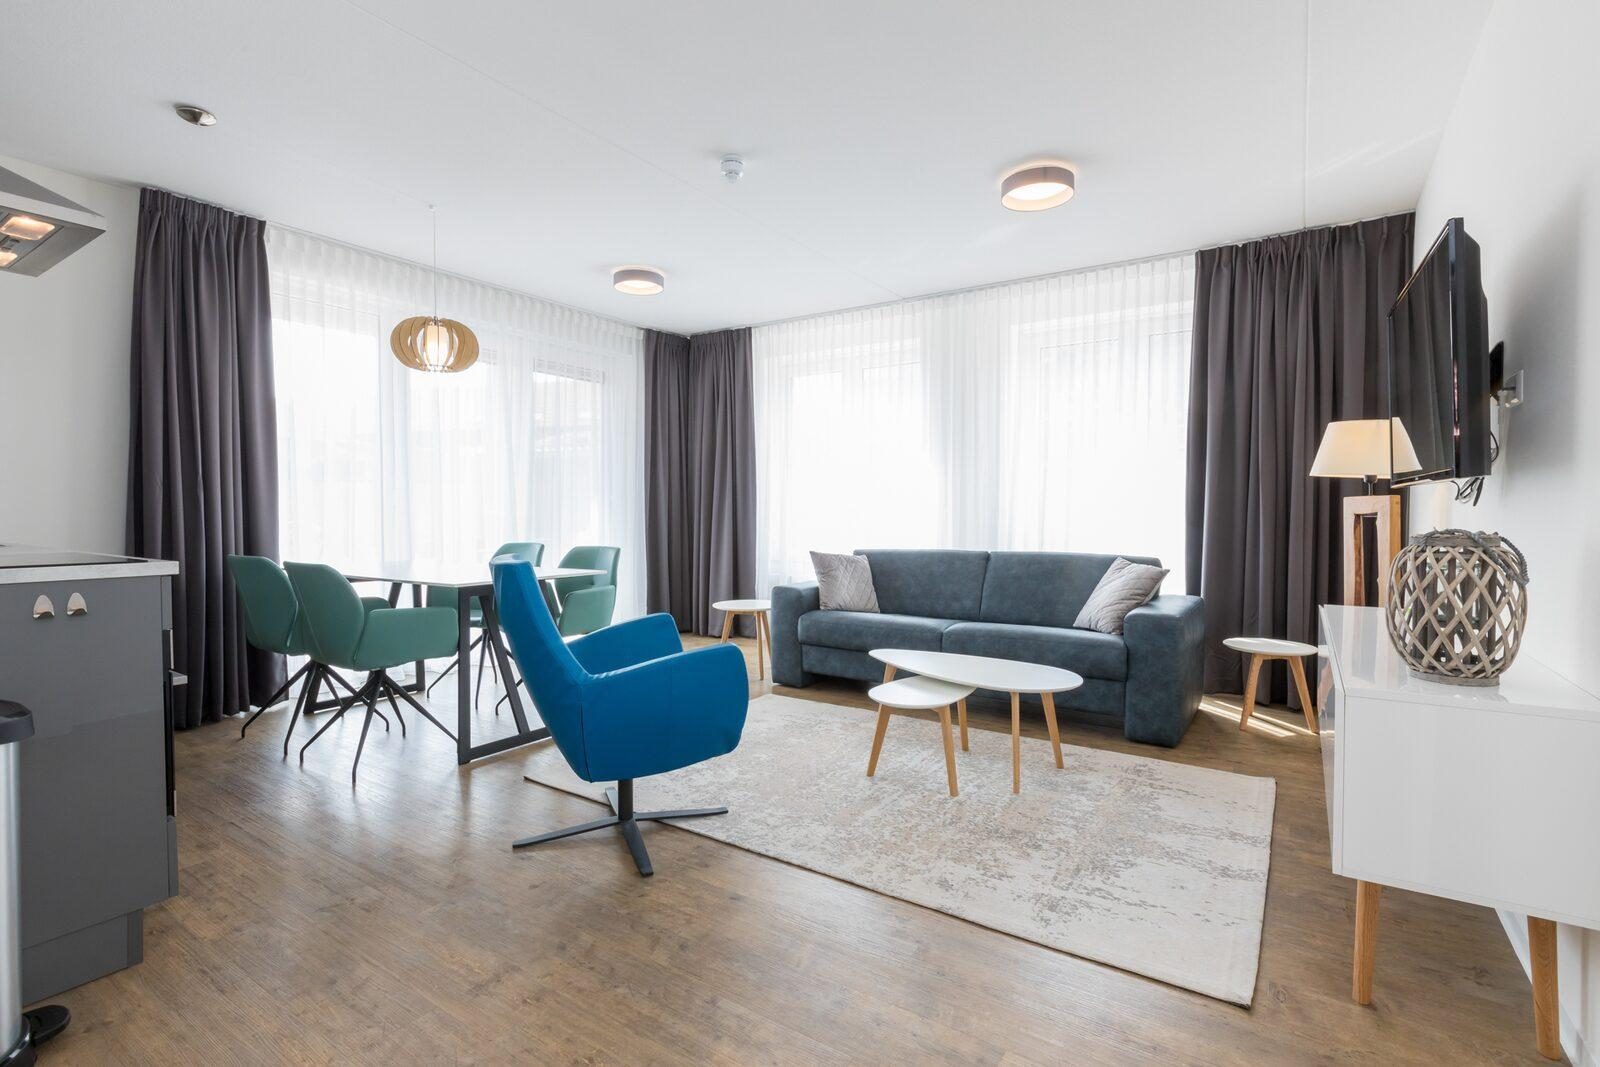 Luxuriöses Appartement Comfort für 2 Personen | Haustierfreundlich Top Merken Winkel